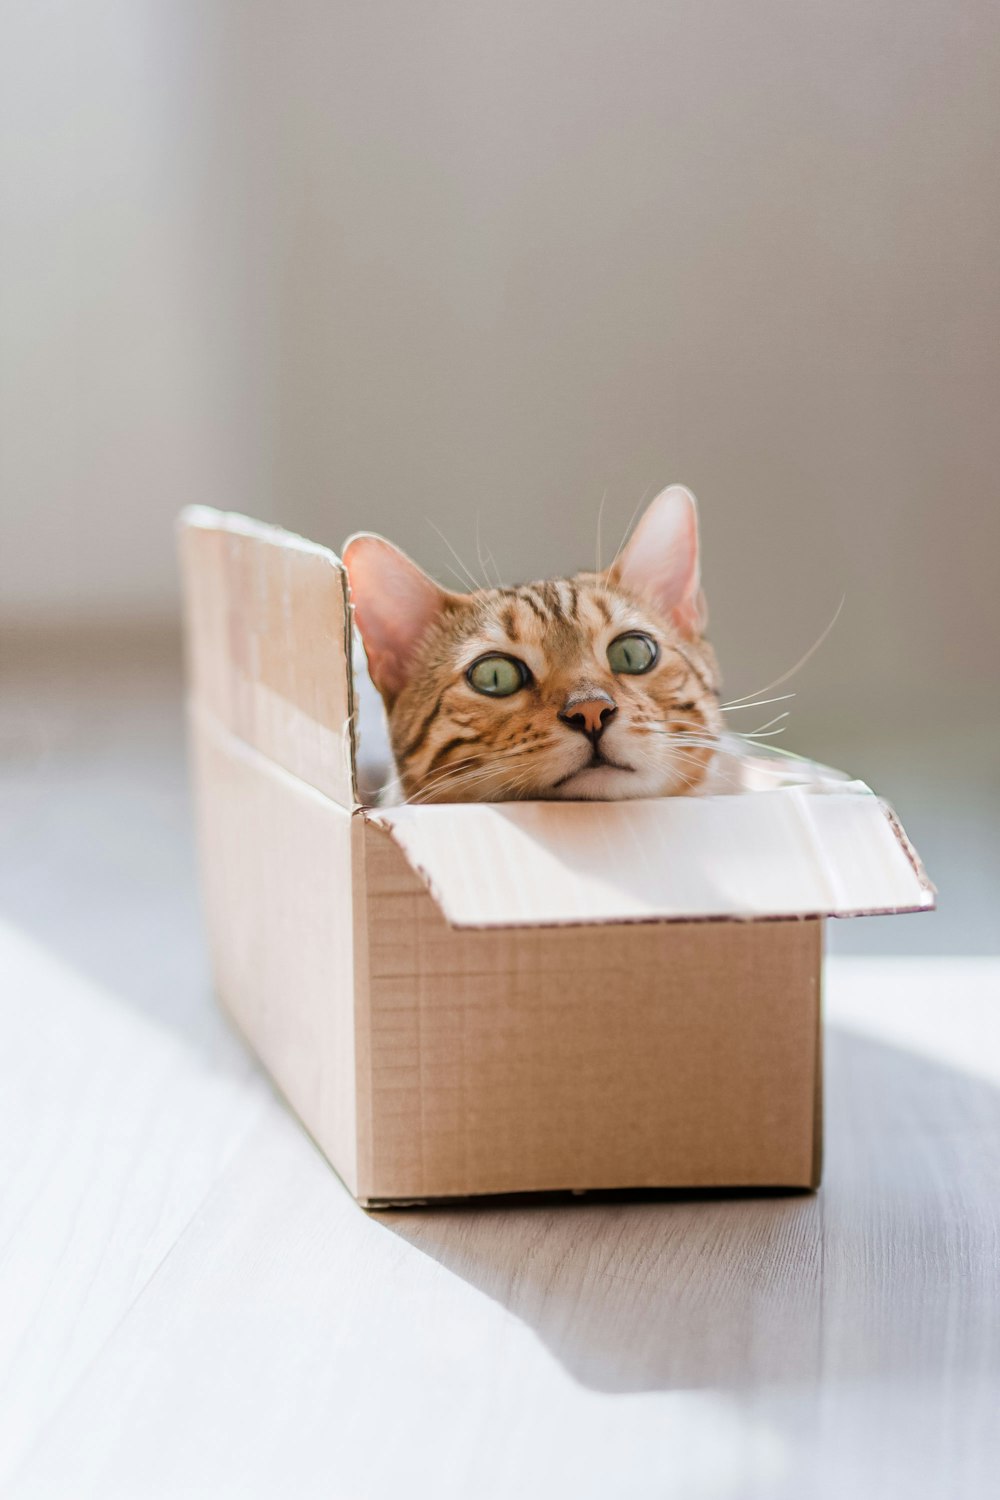 a cat peeking out of a cardboard box